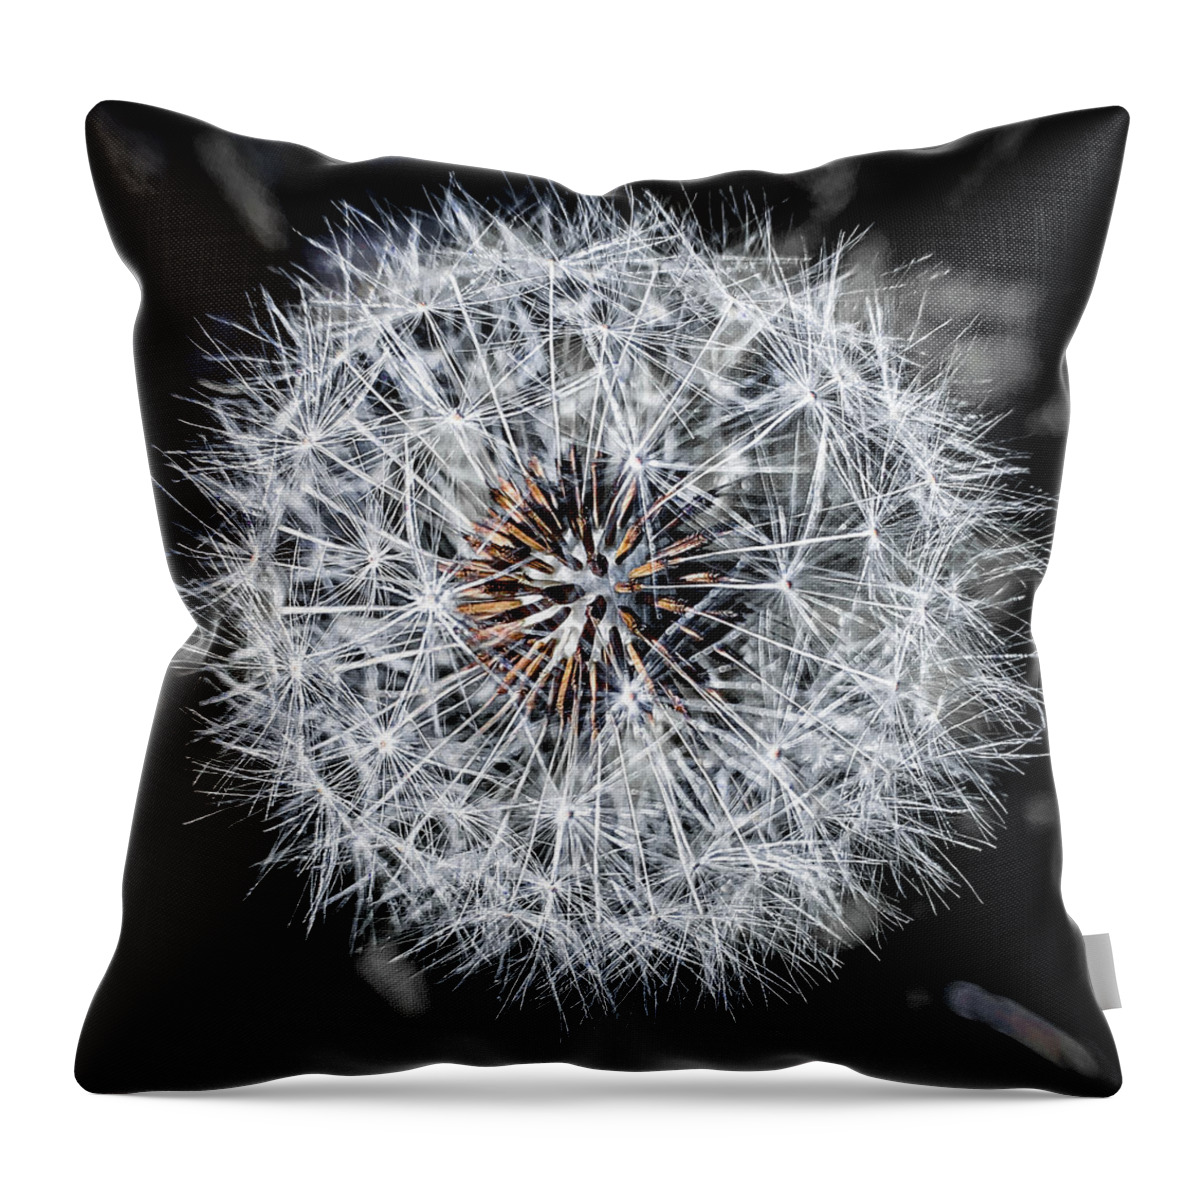 Dandelion Throw Pillow featuring the photograph Close up of a dandelion by Jim Feldman